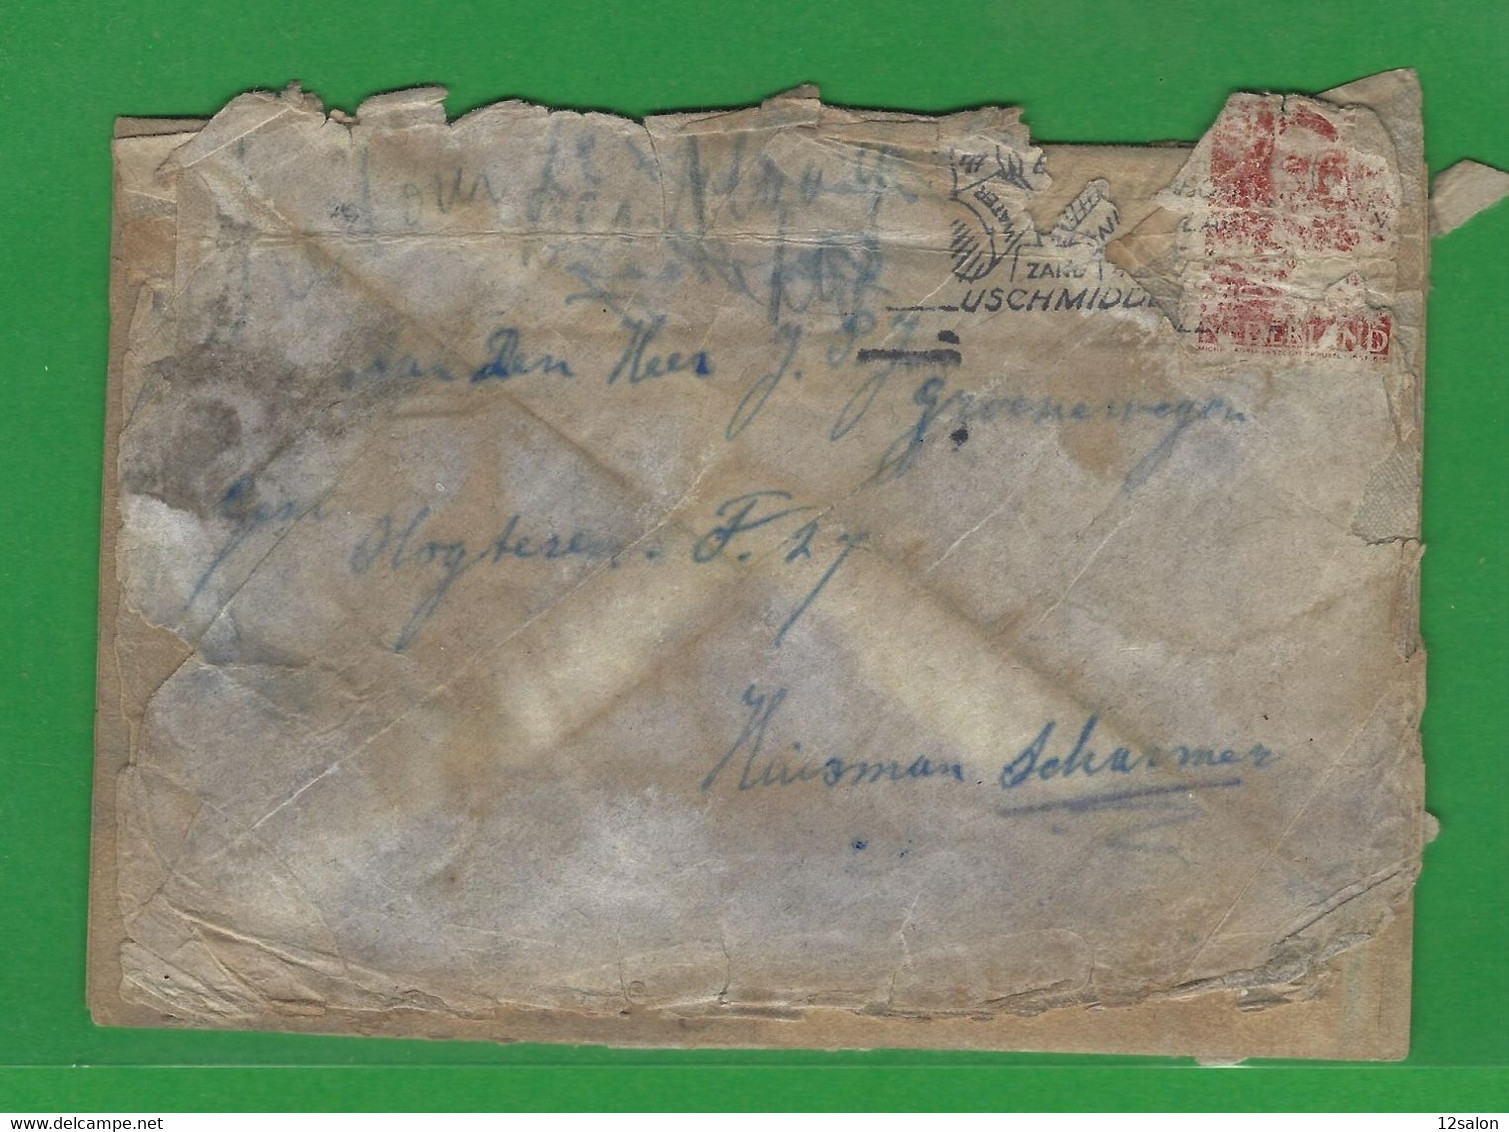 WRECK NAUFRAGE SS GRONINGEN IV 8 JANVIER 1945 SUR LETTRE DES PAYS BAS - Postal History